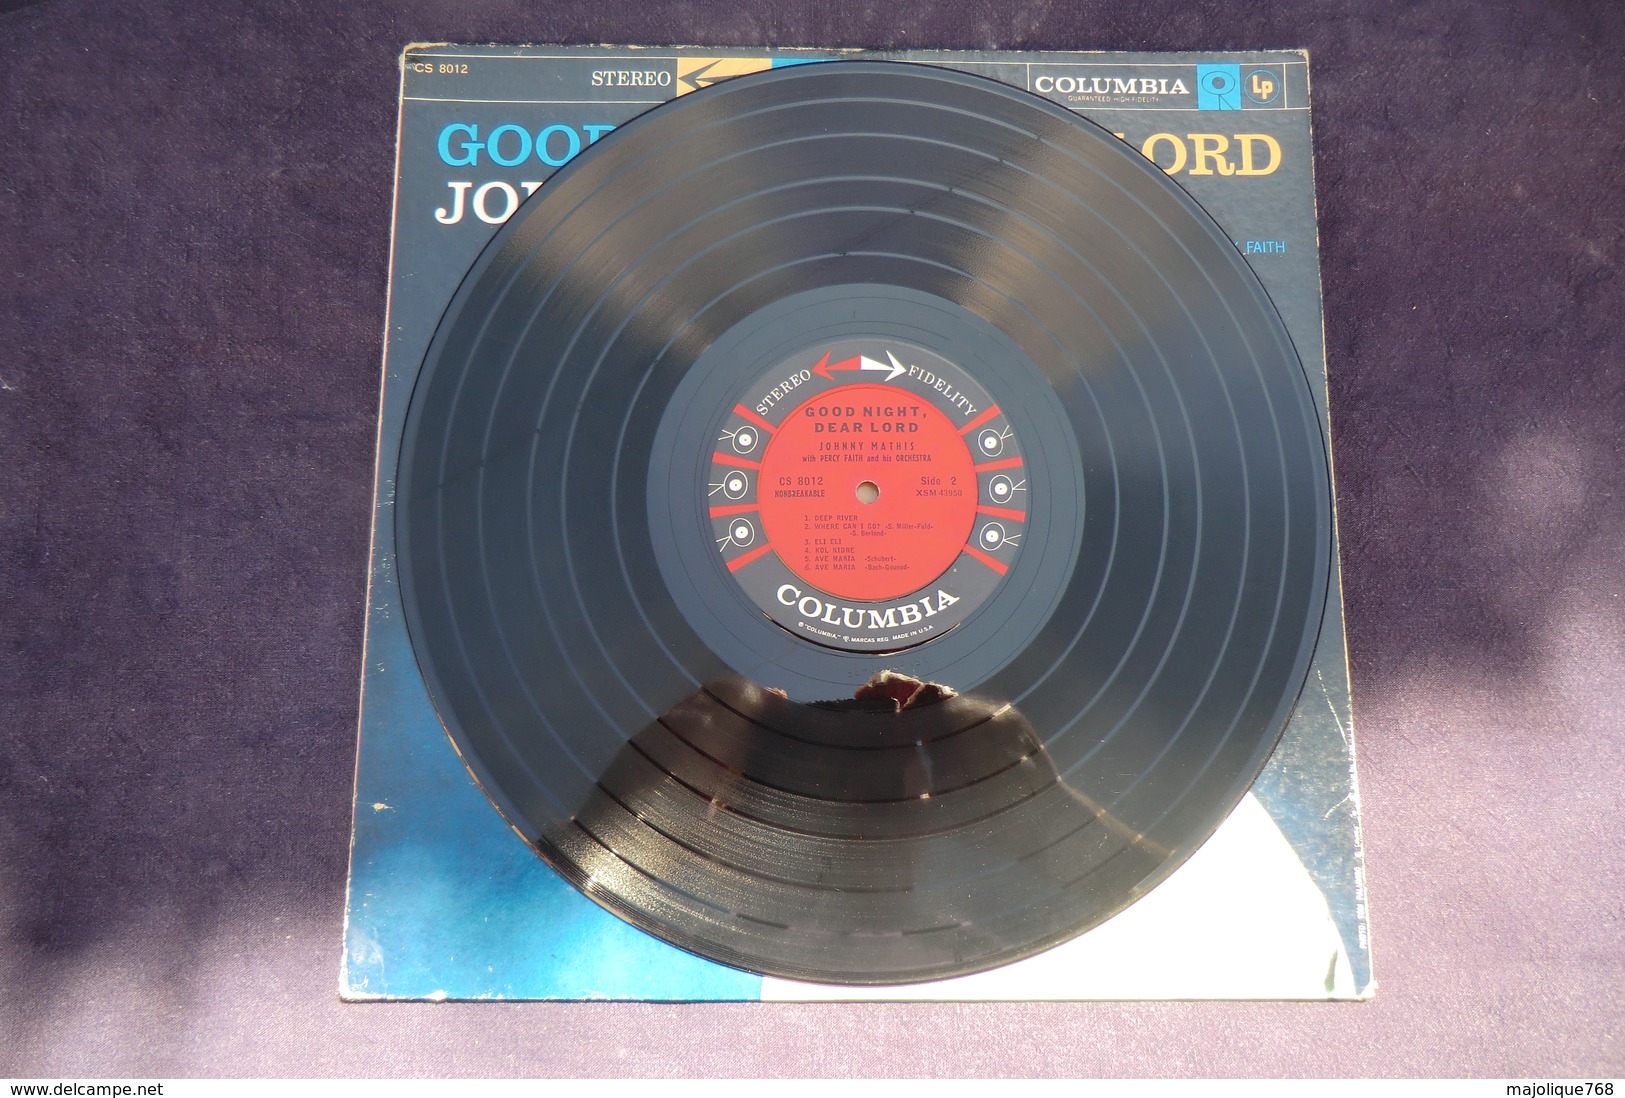 Disque De Johnny Mathis - Good Night, Dear Lord - Columbia CS 8012 - - Jazz